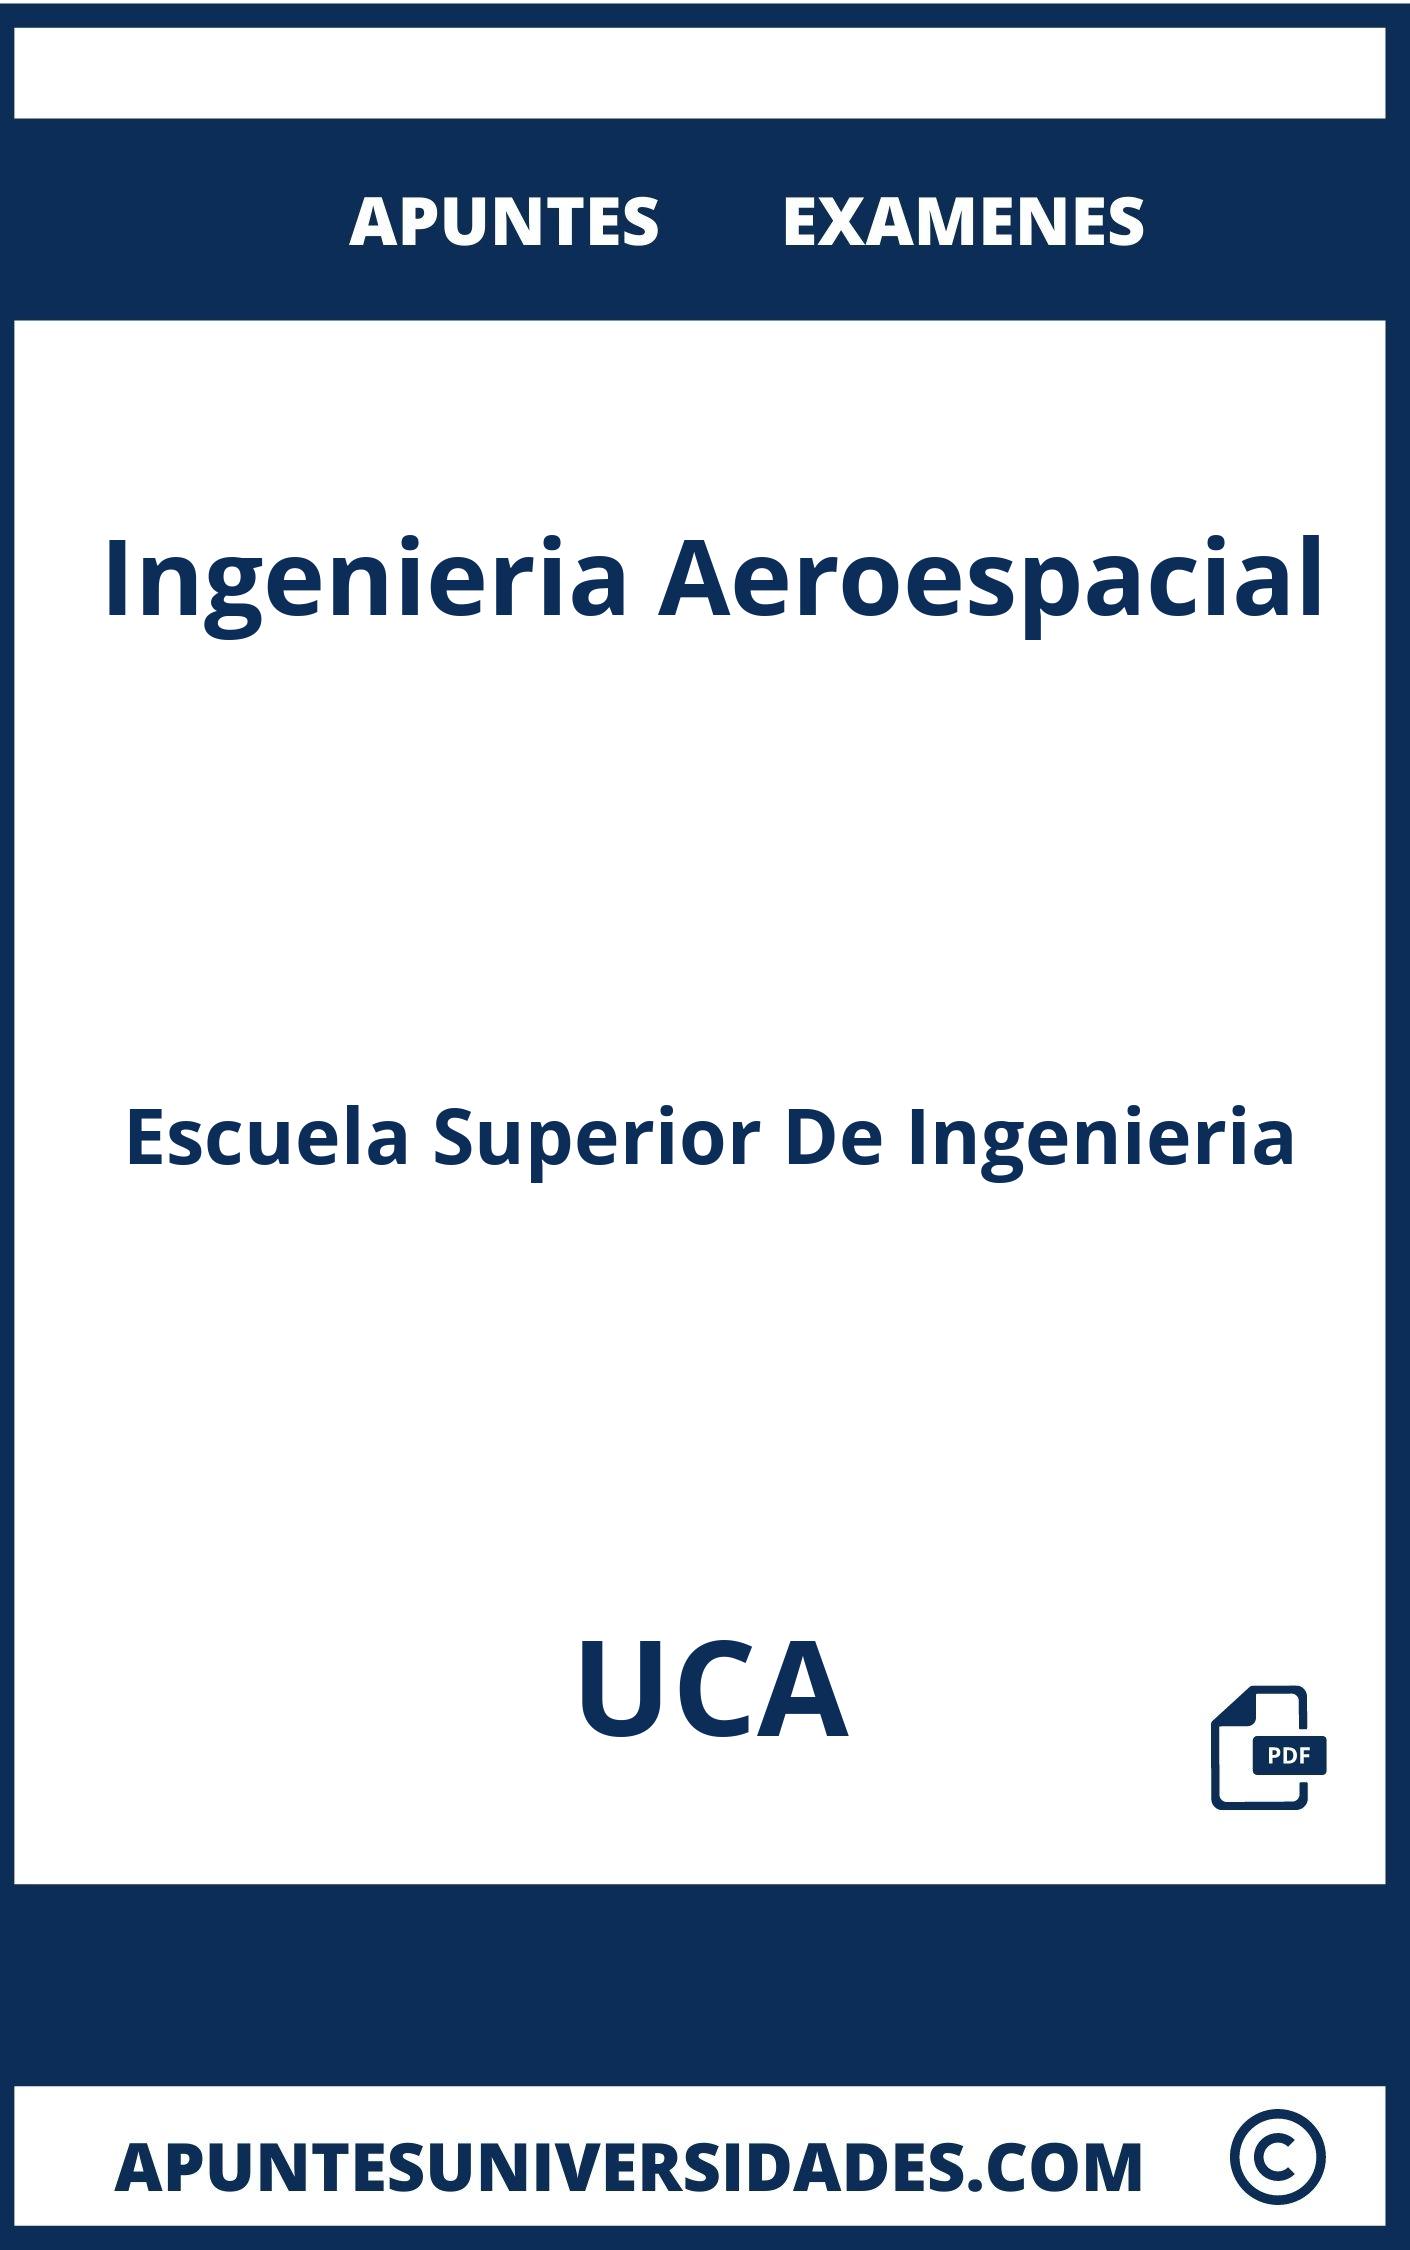 Apuntes Examenes Ingenieria Aeroespacial UCA